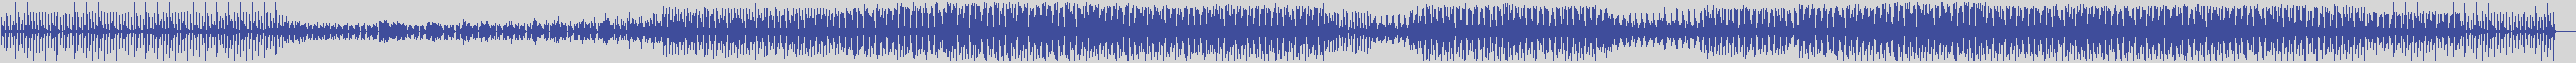 atomic_recordings [AR014] Jellyfish, Masstaff - Push It to Max [Original Mix] audio wave form